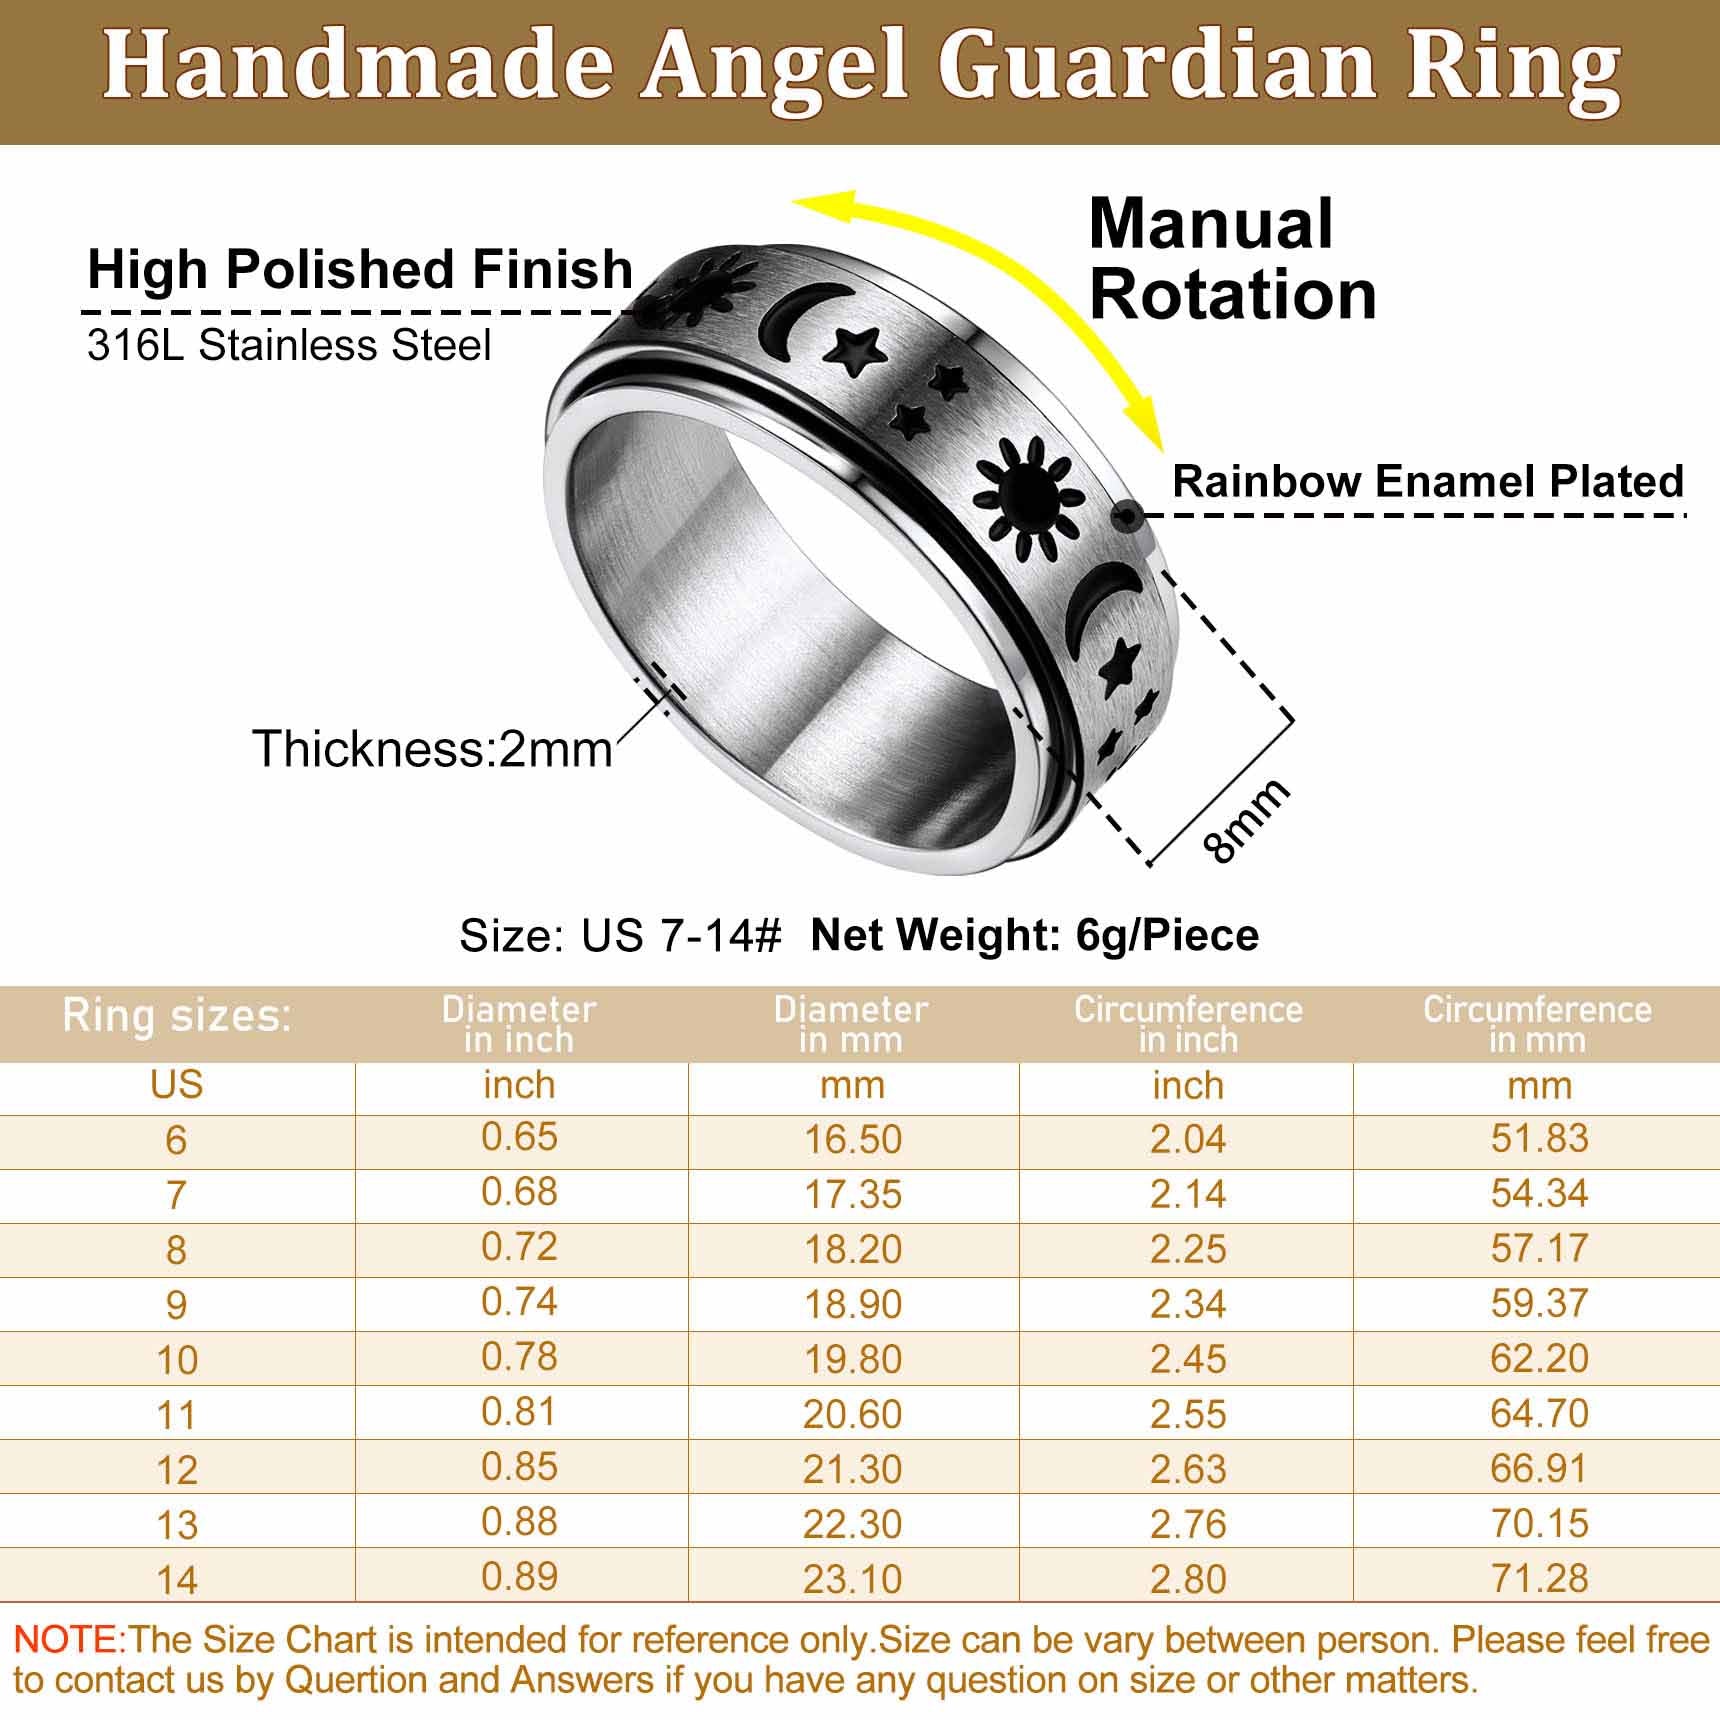 FaithHeart Moon Star Sun Ring Fidget Ring for Anxiety Stainless Steel FaithHeart